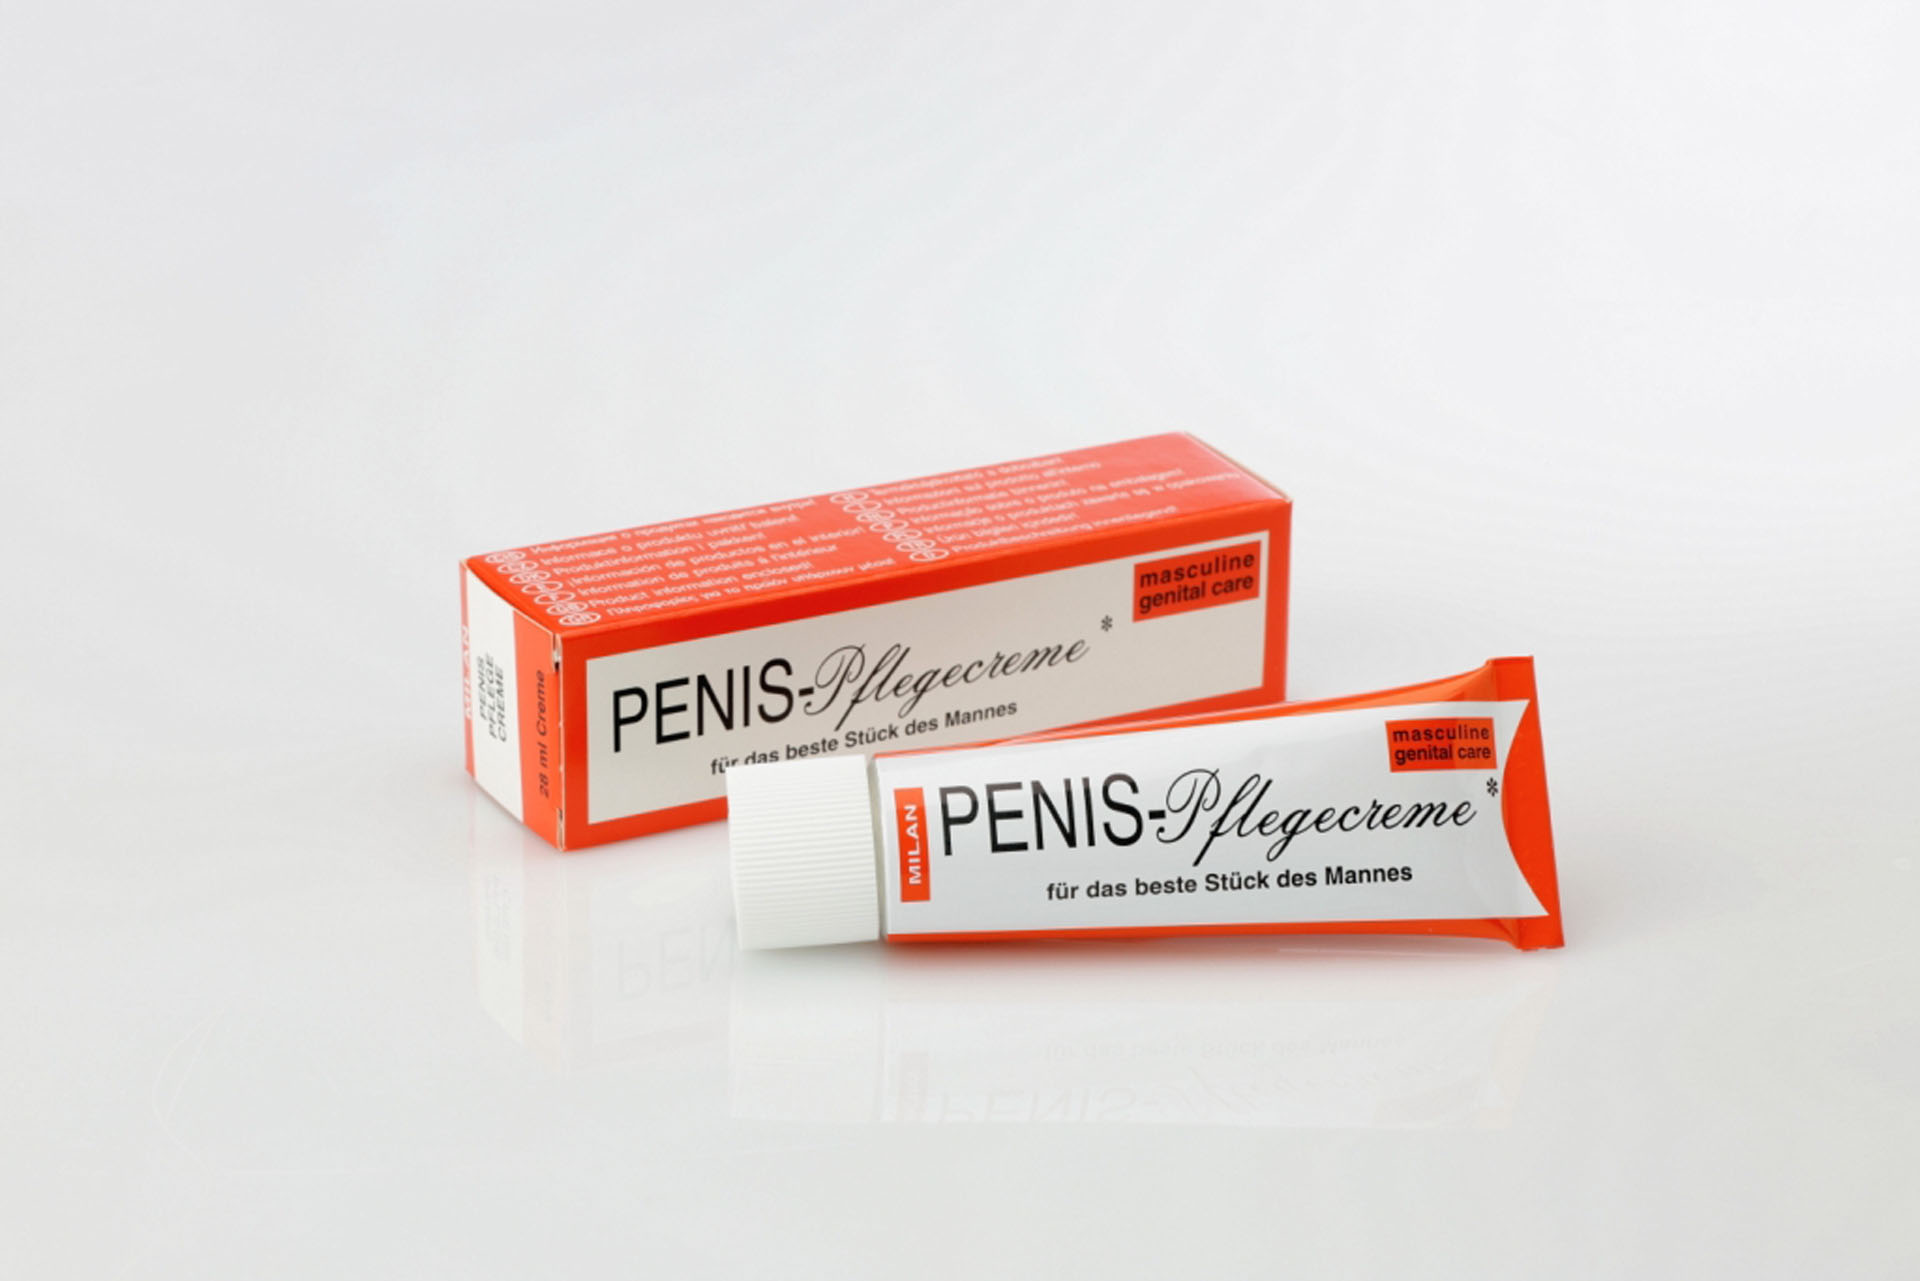 Produktbild penis-pflegecreme